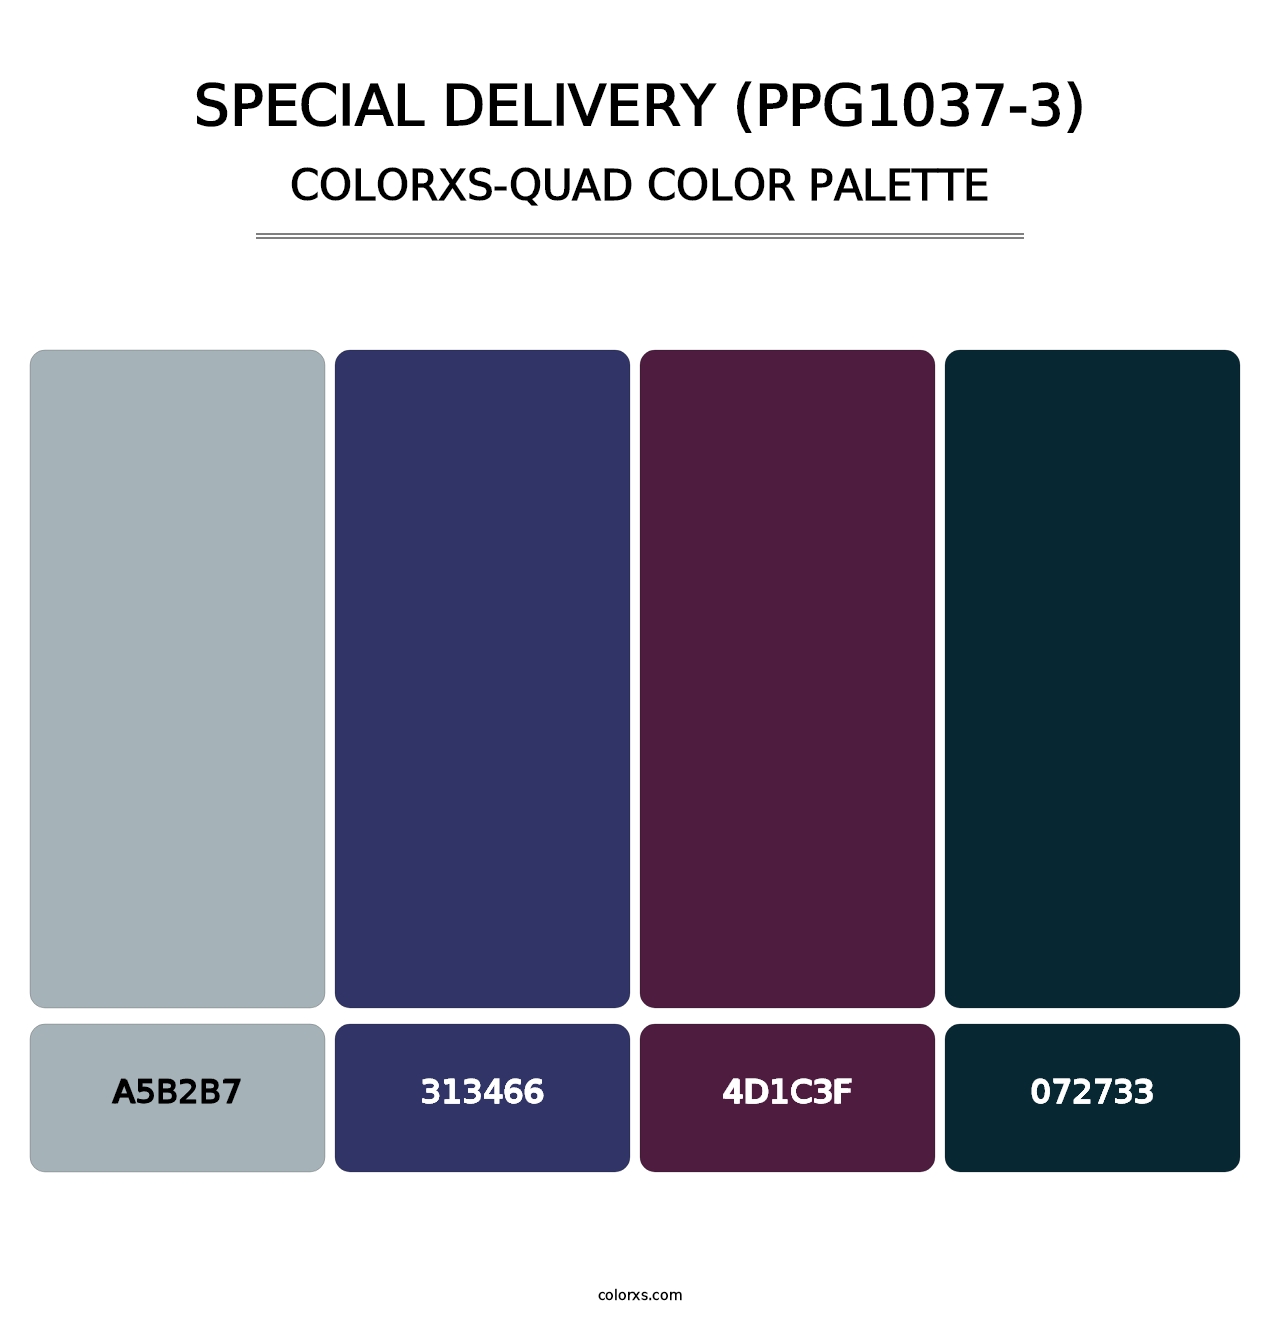 Special Delivery (PPG1037-3) - Colorxs Quad Palette